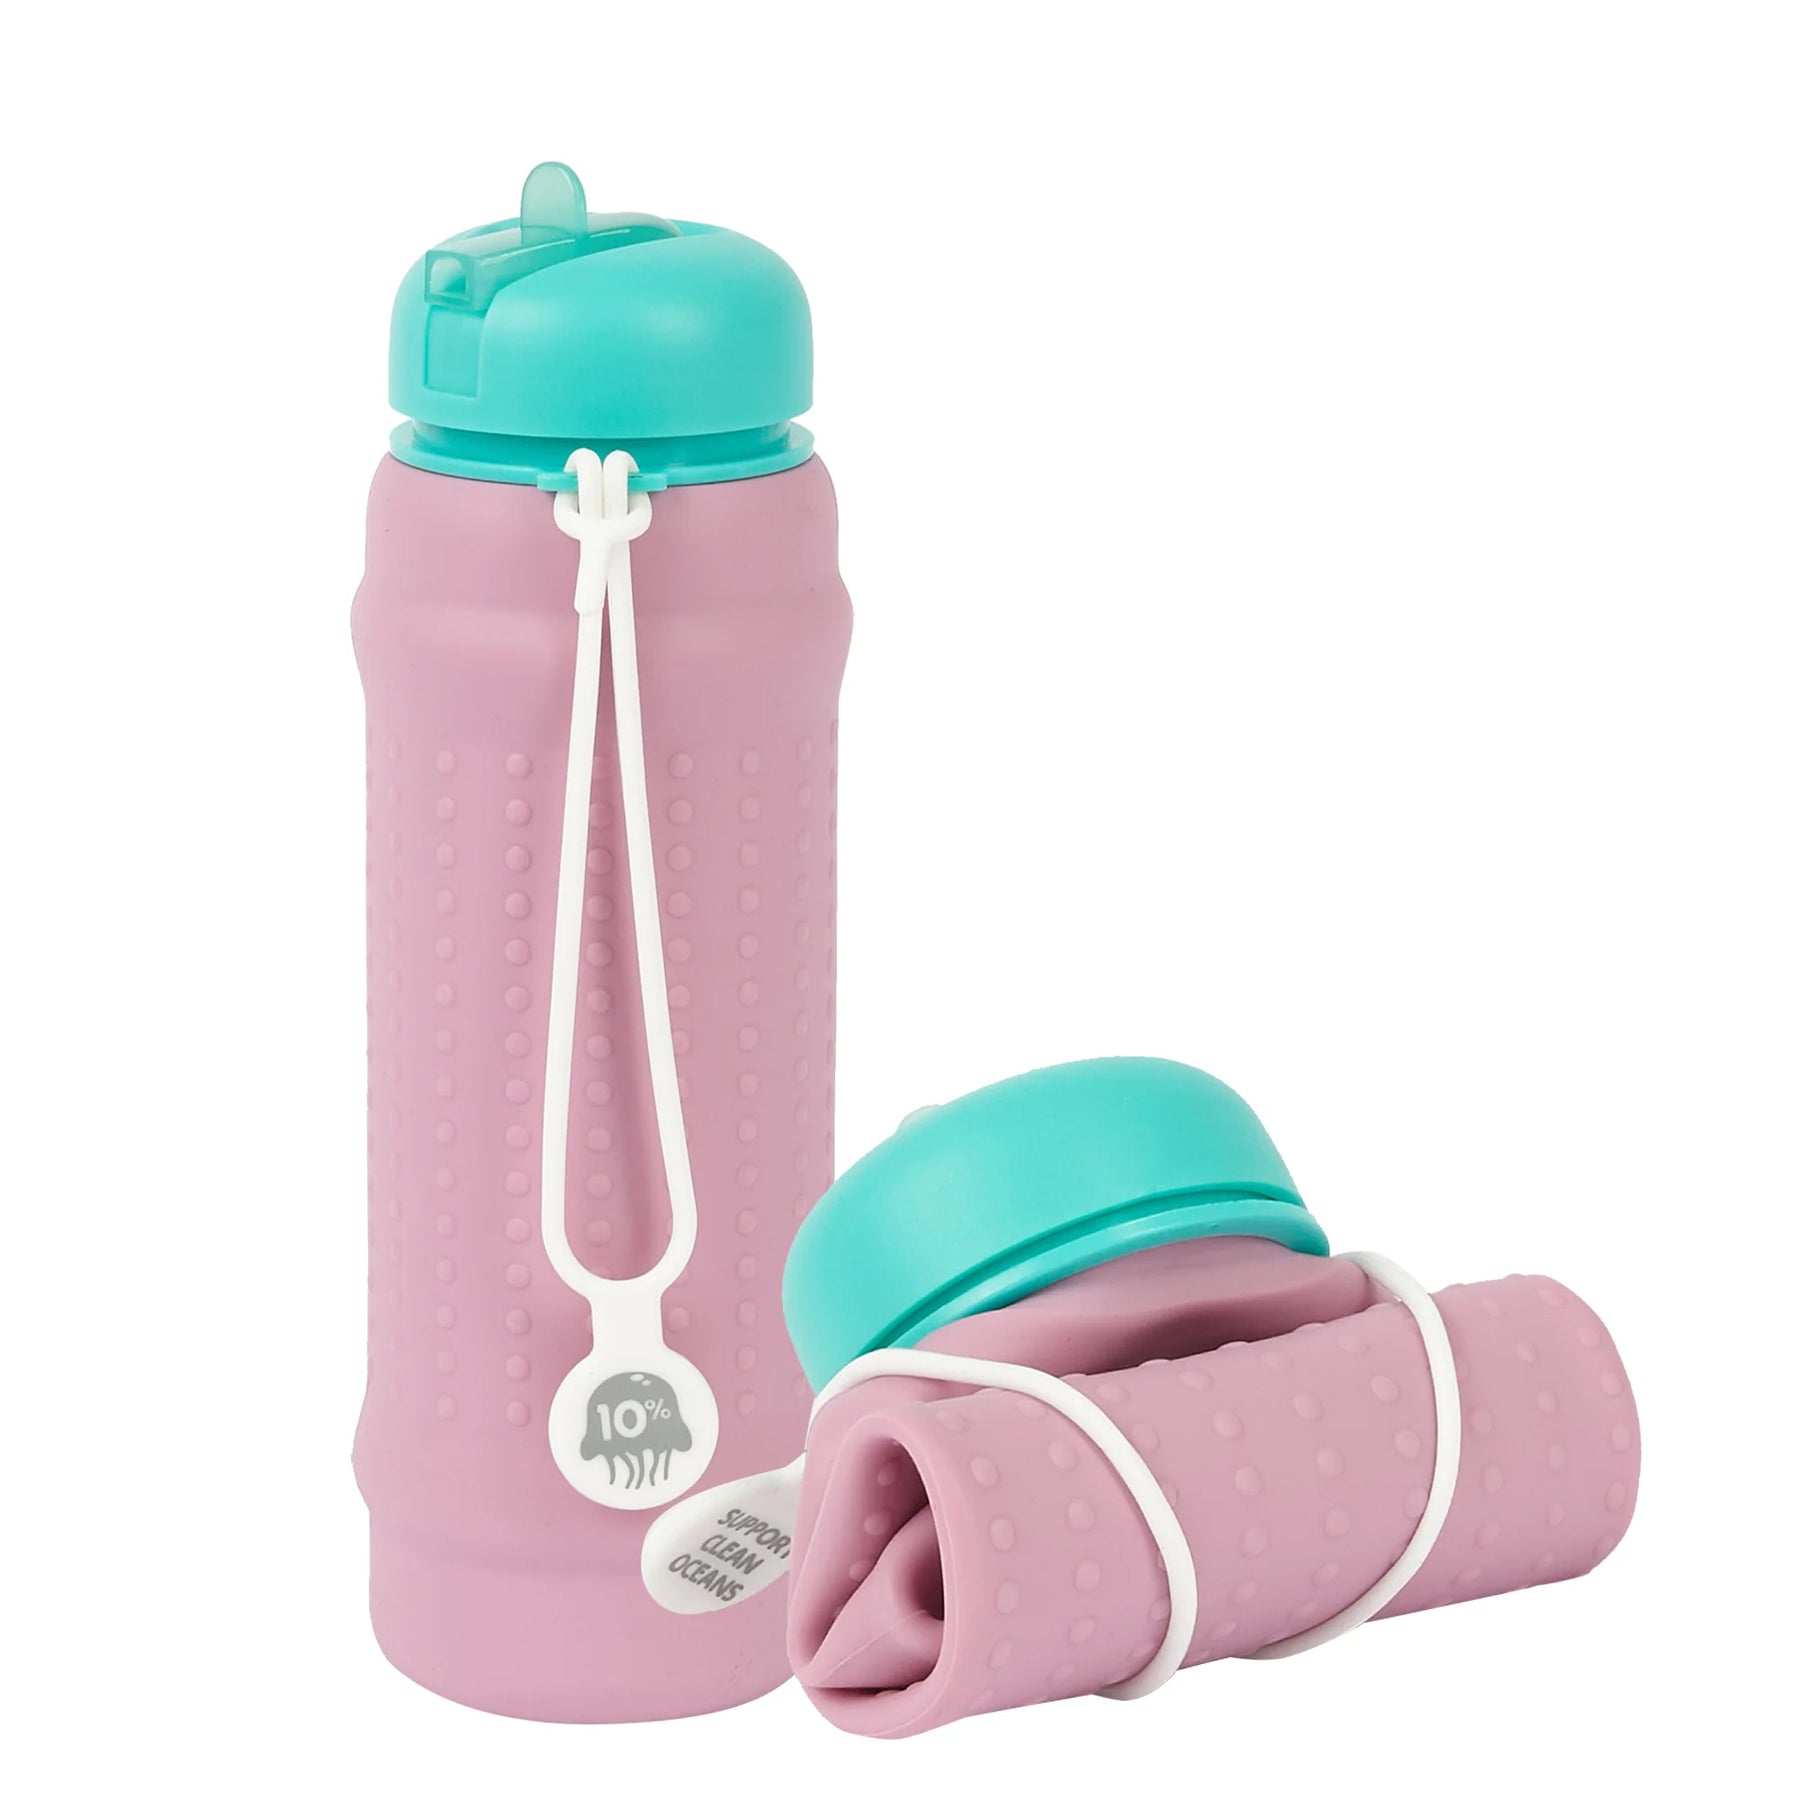 Rolla bottle - pink with aqua lid.